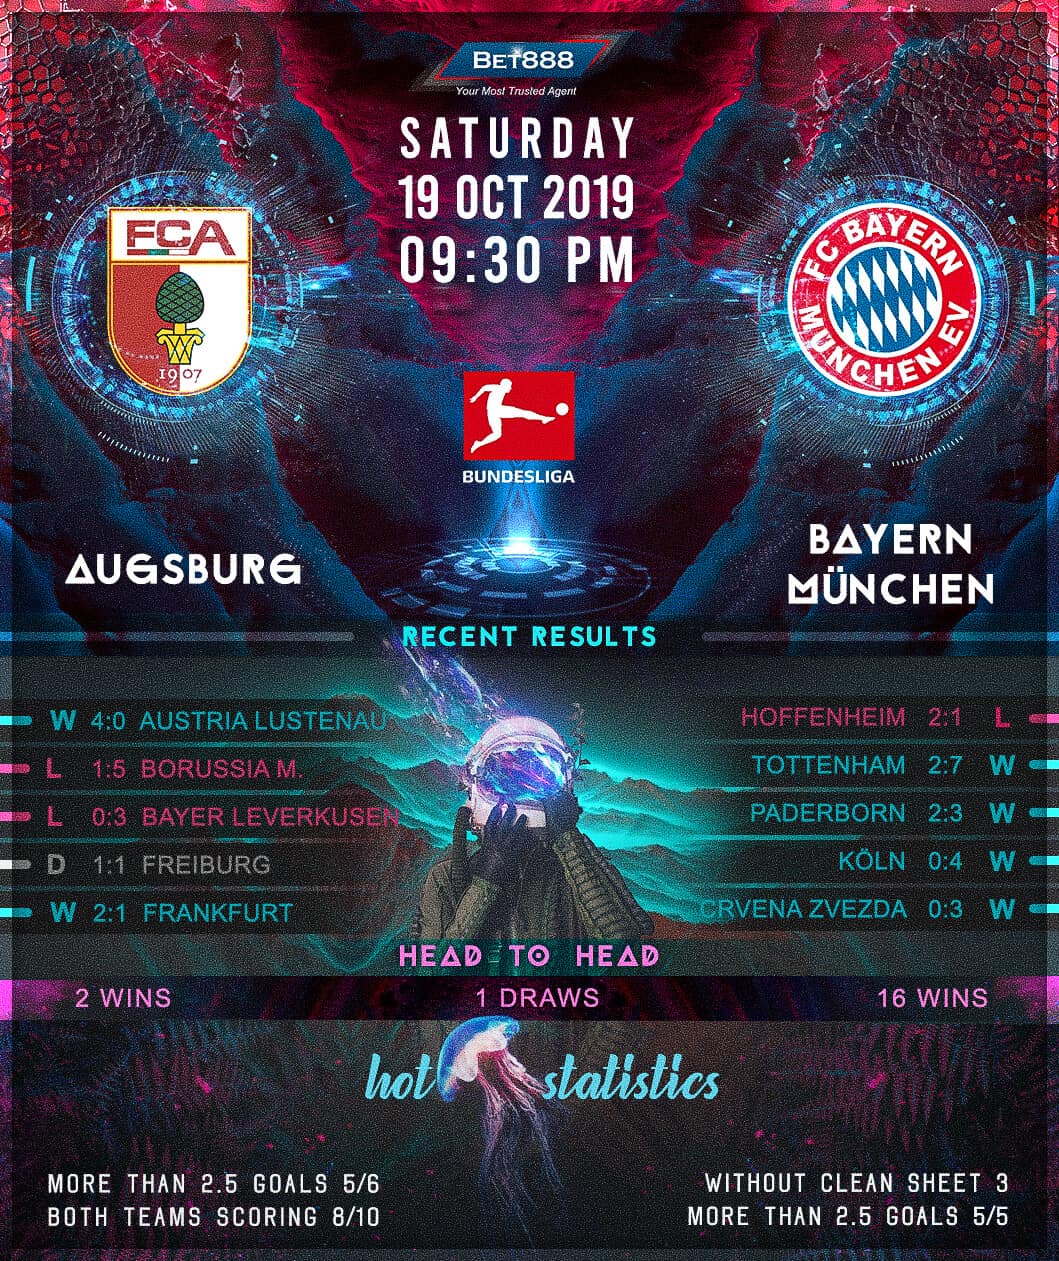 Augsburg vs Bayern Munich 19/10/19